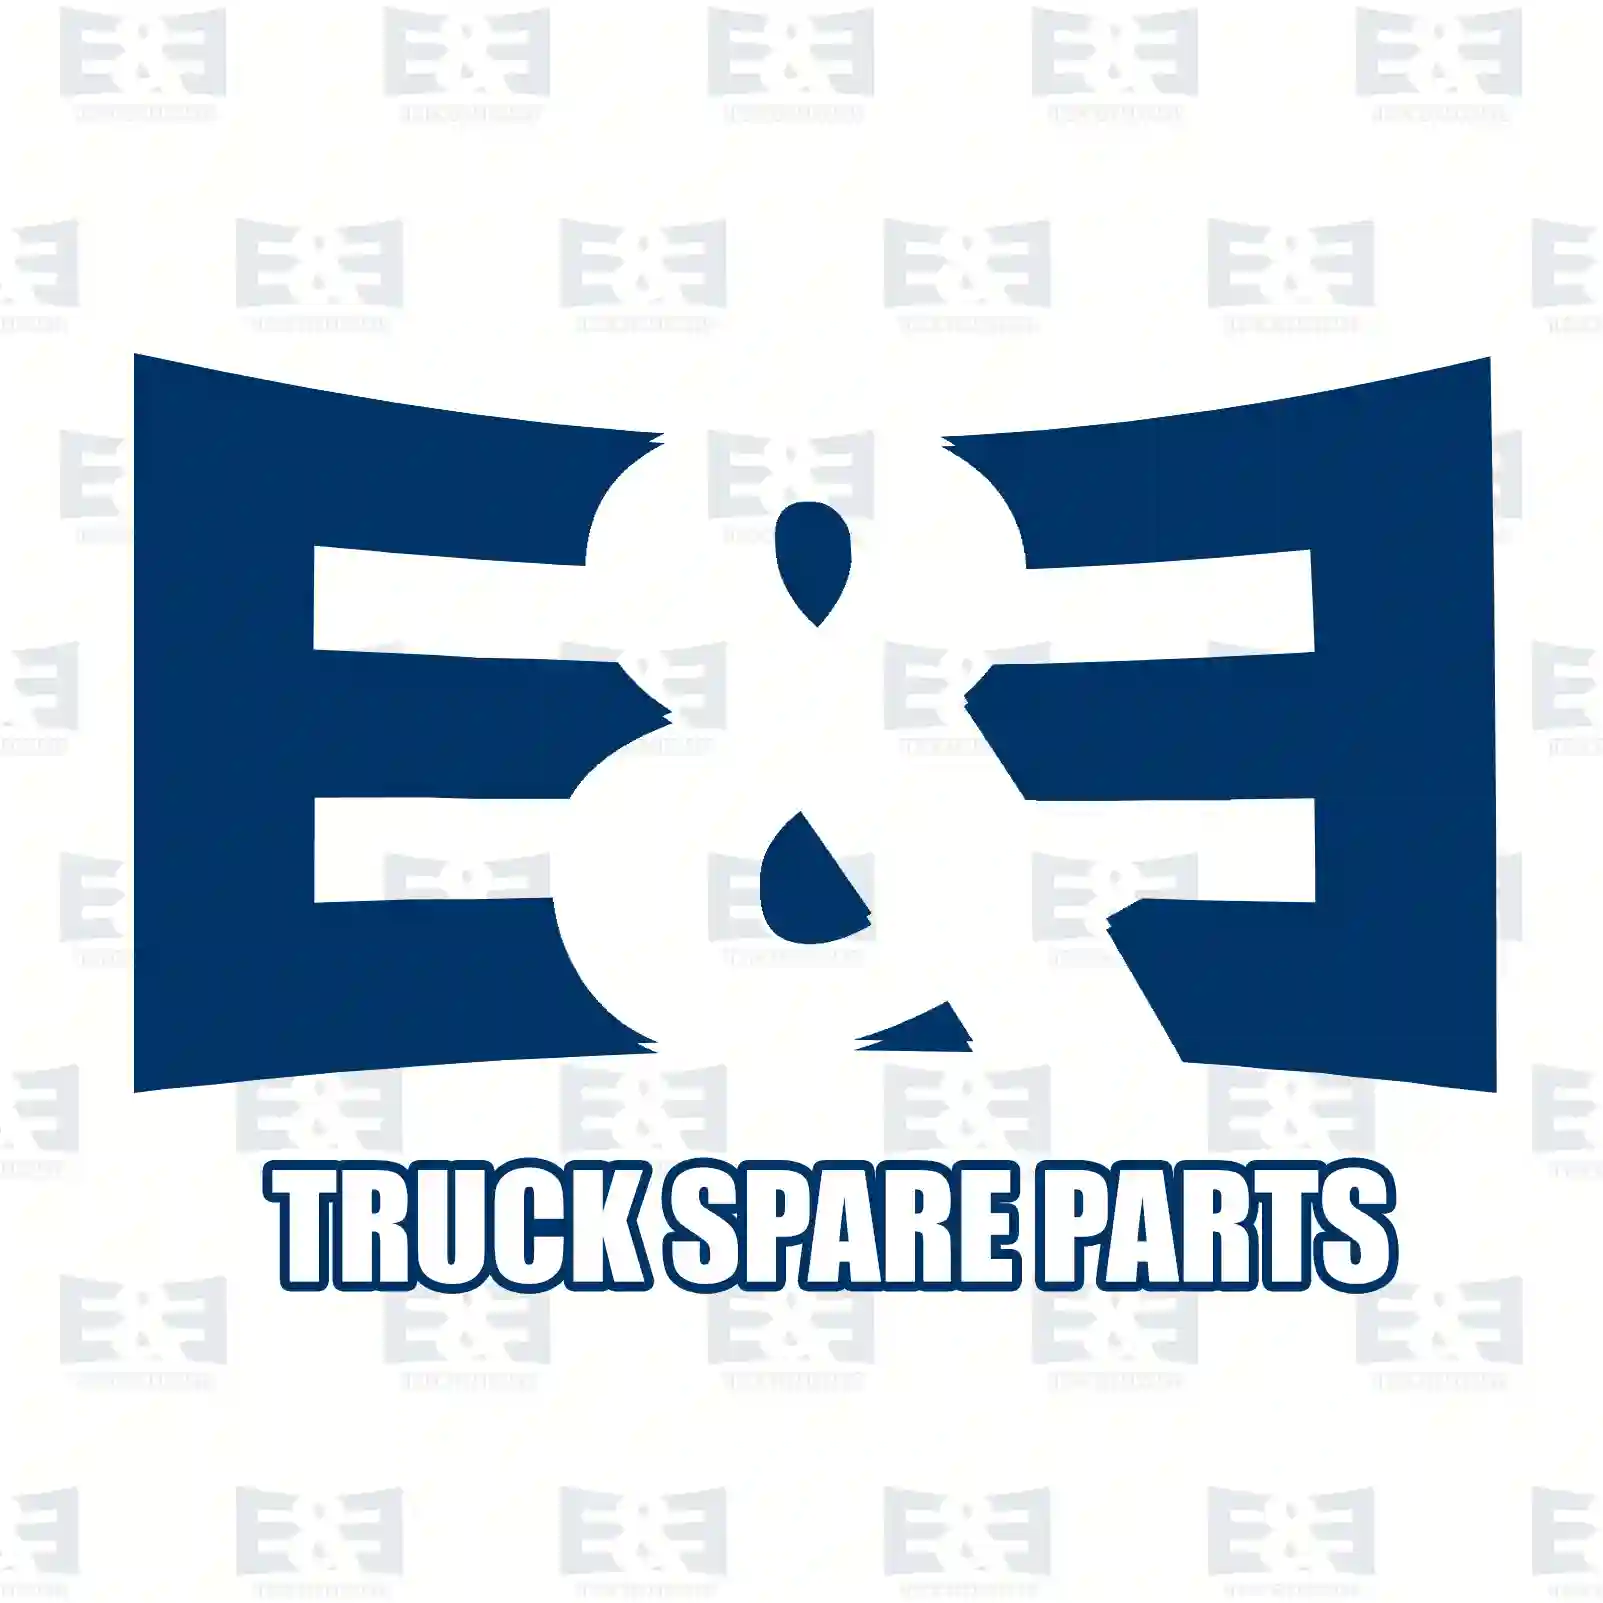 Engine hood slot, 2E2275456, 793488, 1349232080, 1369756080, 793488 ||  2E2275456 E&E Truck Spare Parts | Truck Spare Parts, Auotomotive Spare Parts Engine hood slot, 2E2275456, 793488, 1349232080, 1369756080, 793488 ||  2E2275456 E&E Truck Spare Parts | Truck Spare Parts, Auotomotive Spare Parts